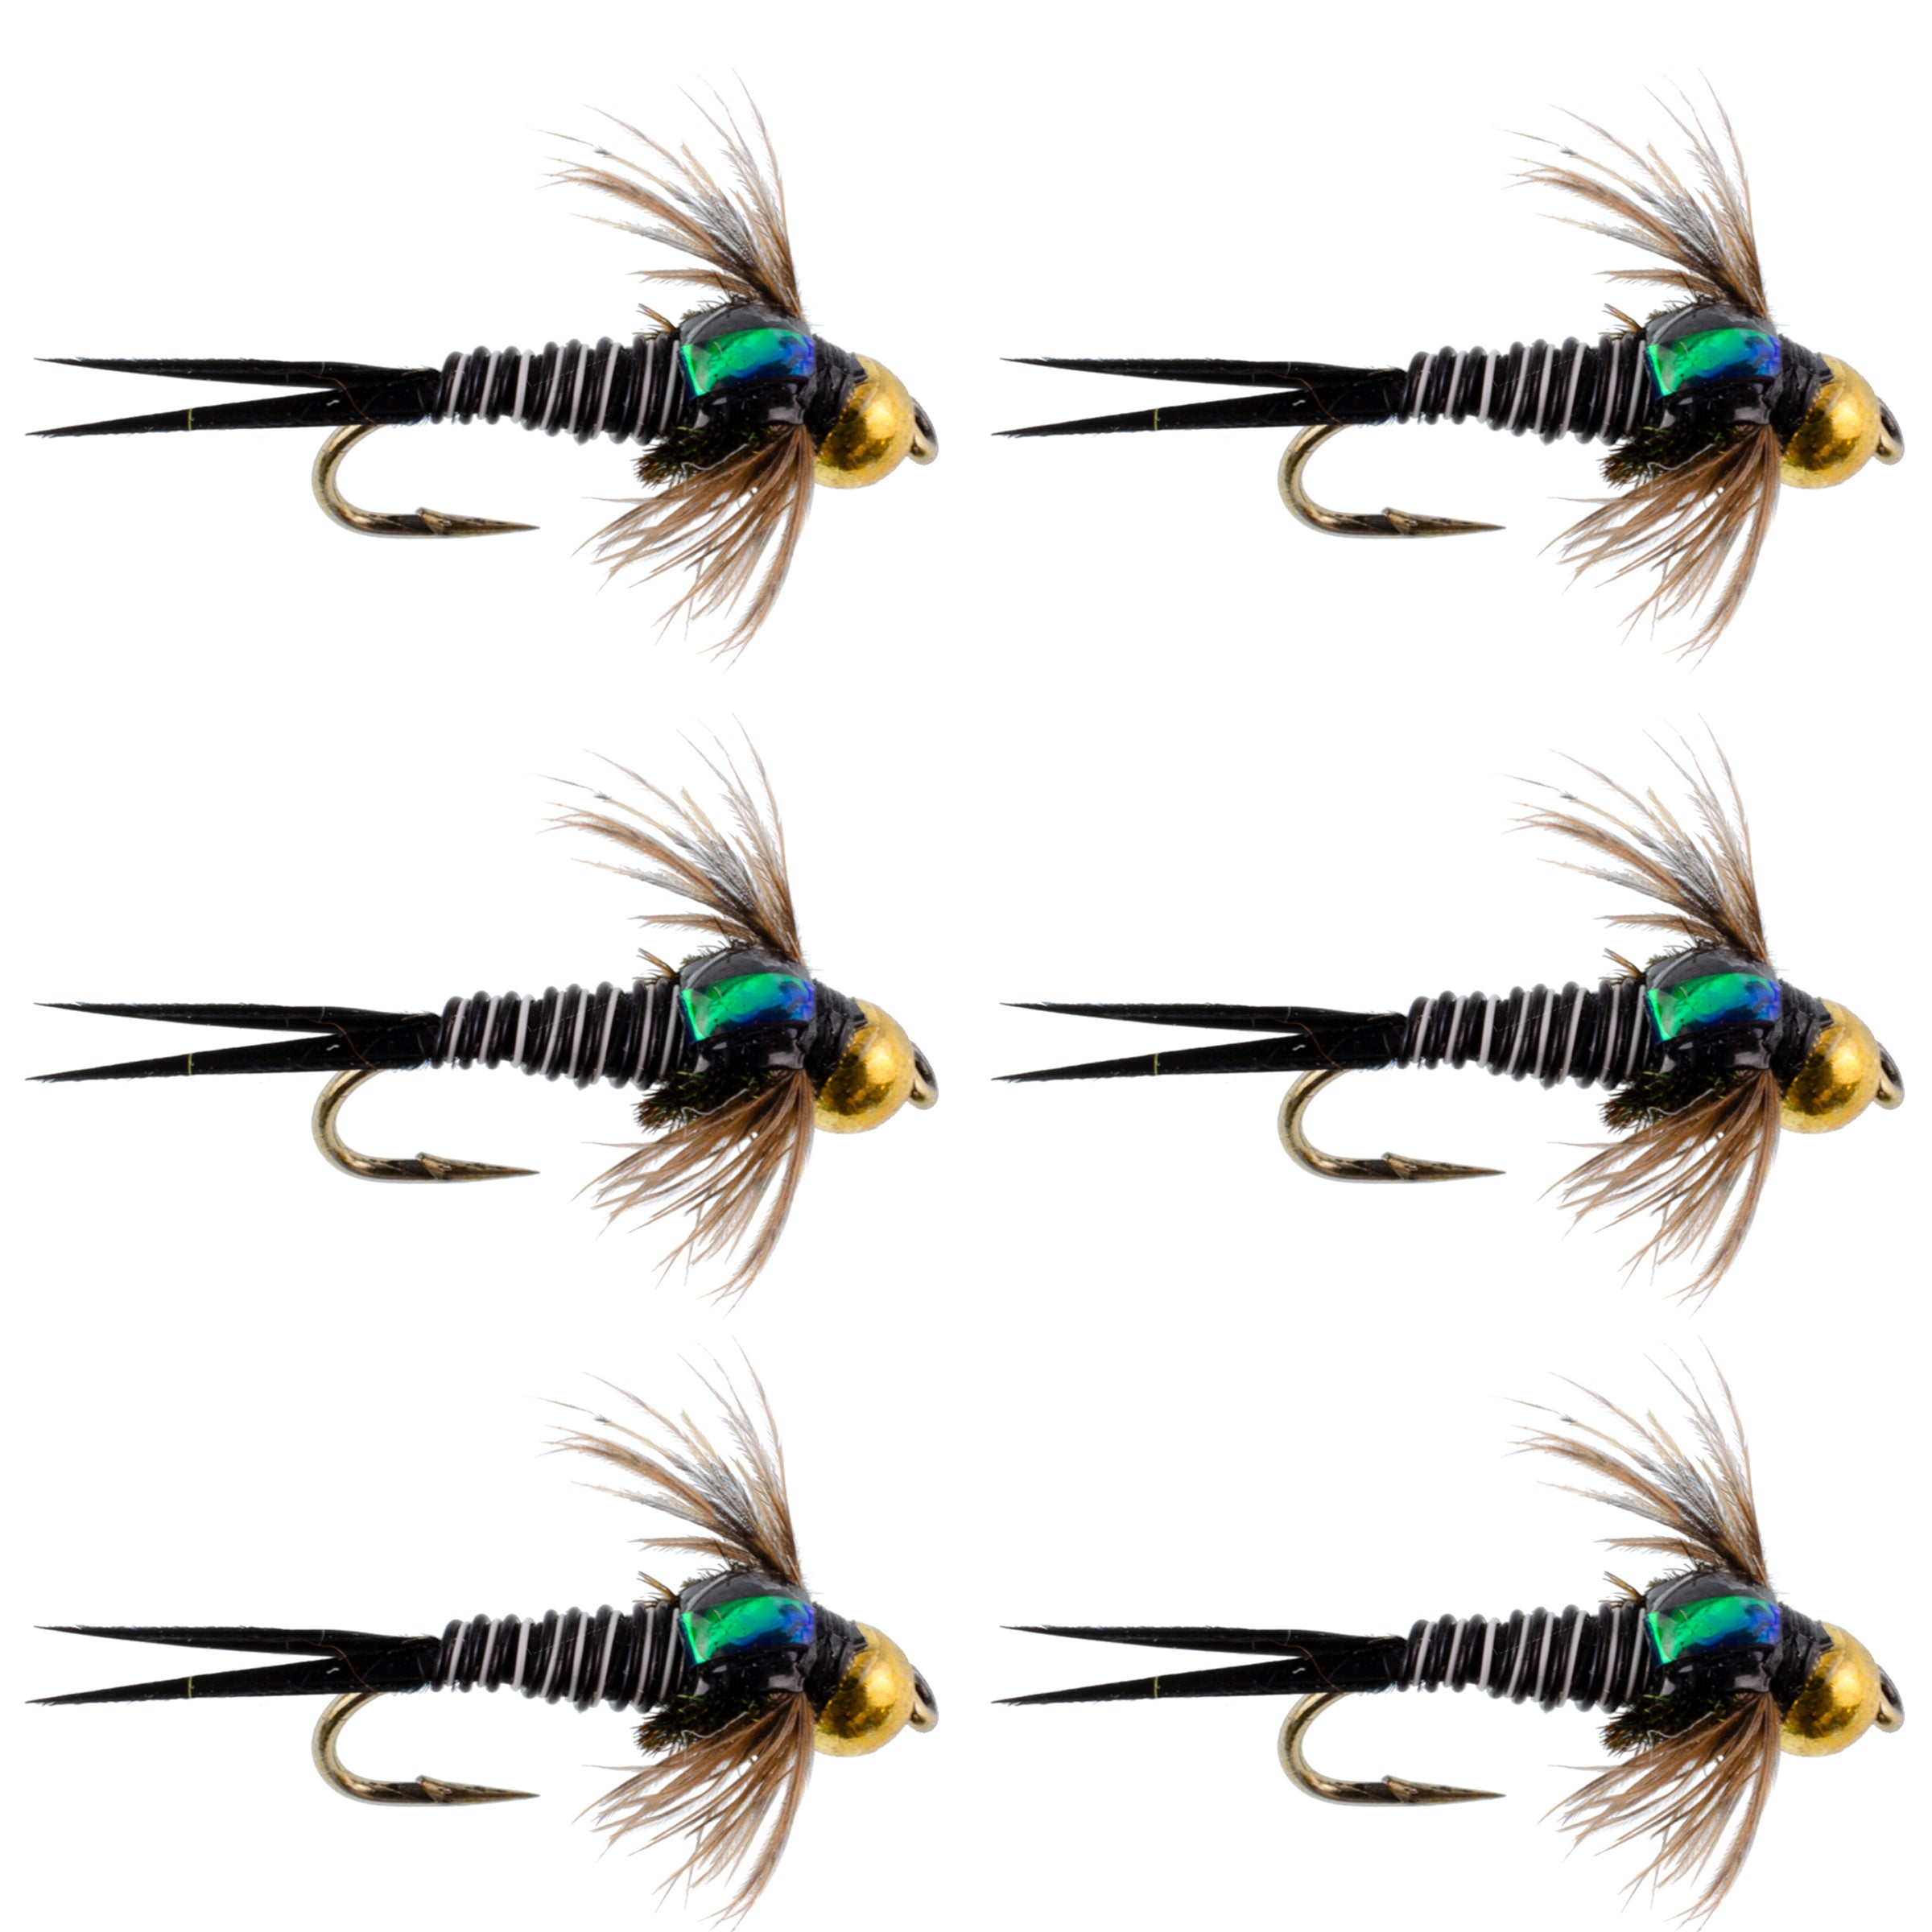 Bead Head Zebra Copper John Nymph Fly Fishing Flies - Set of 6 Flies H